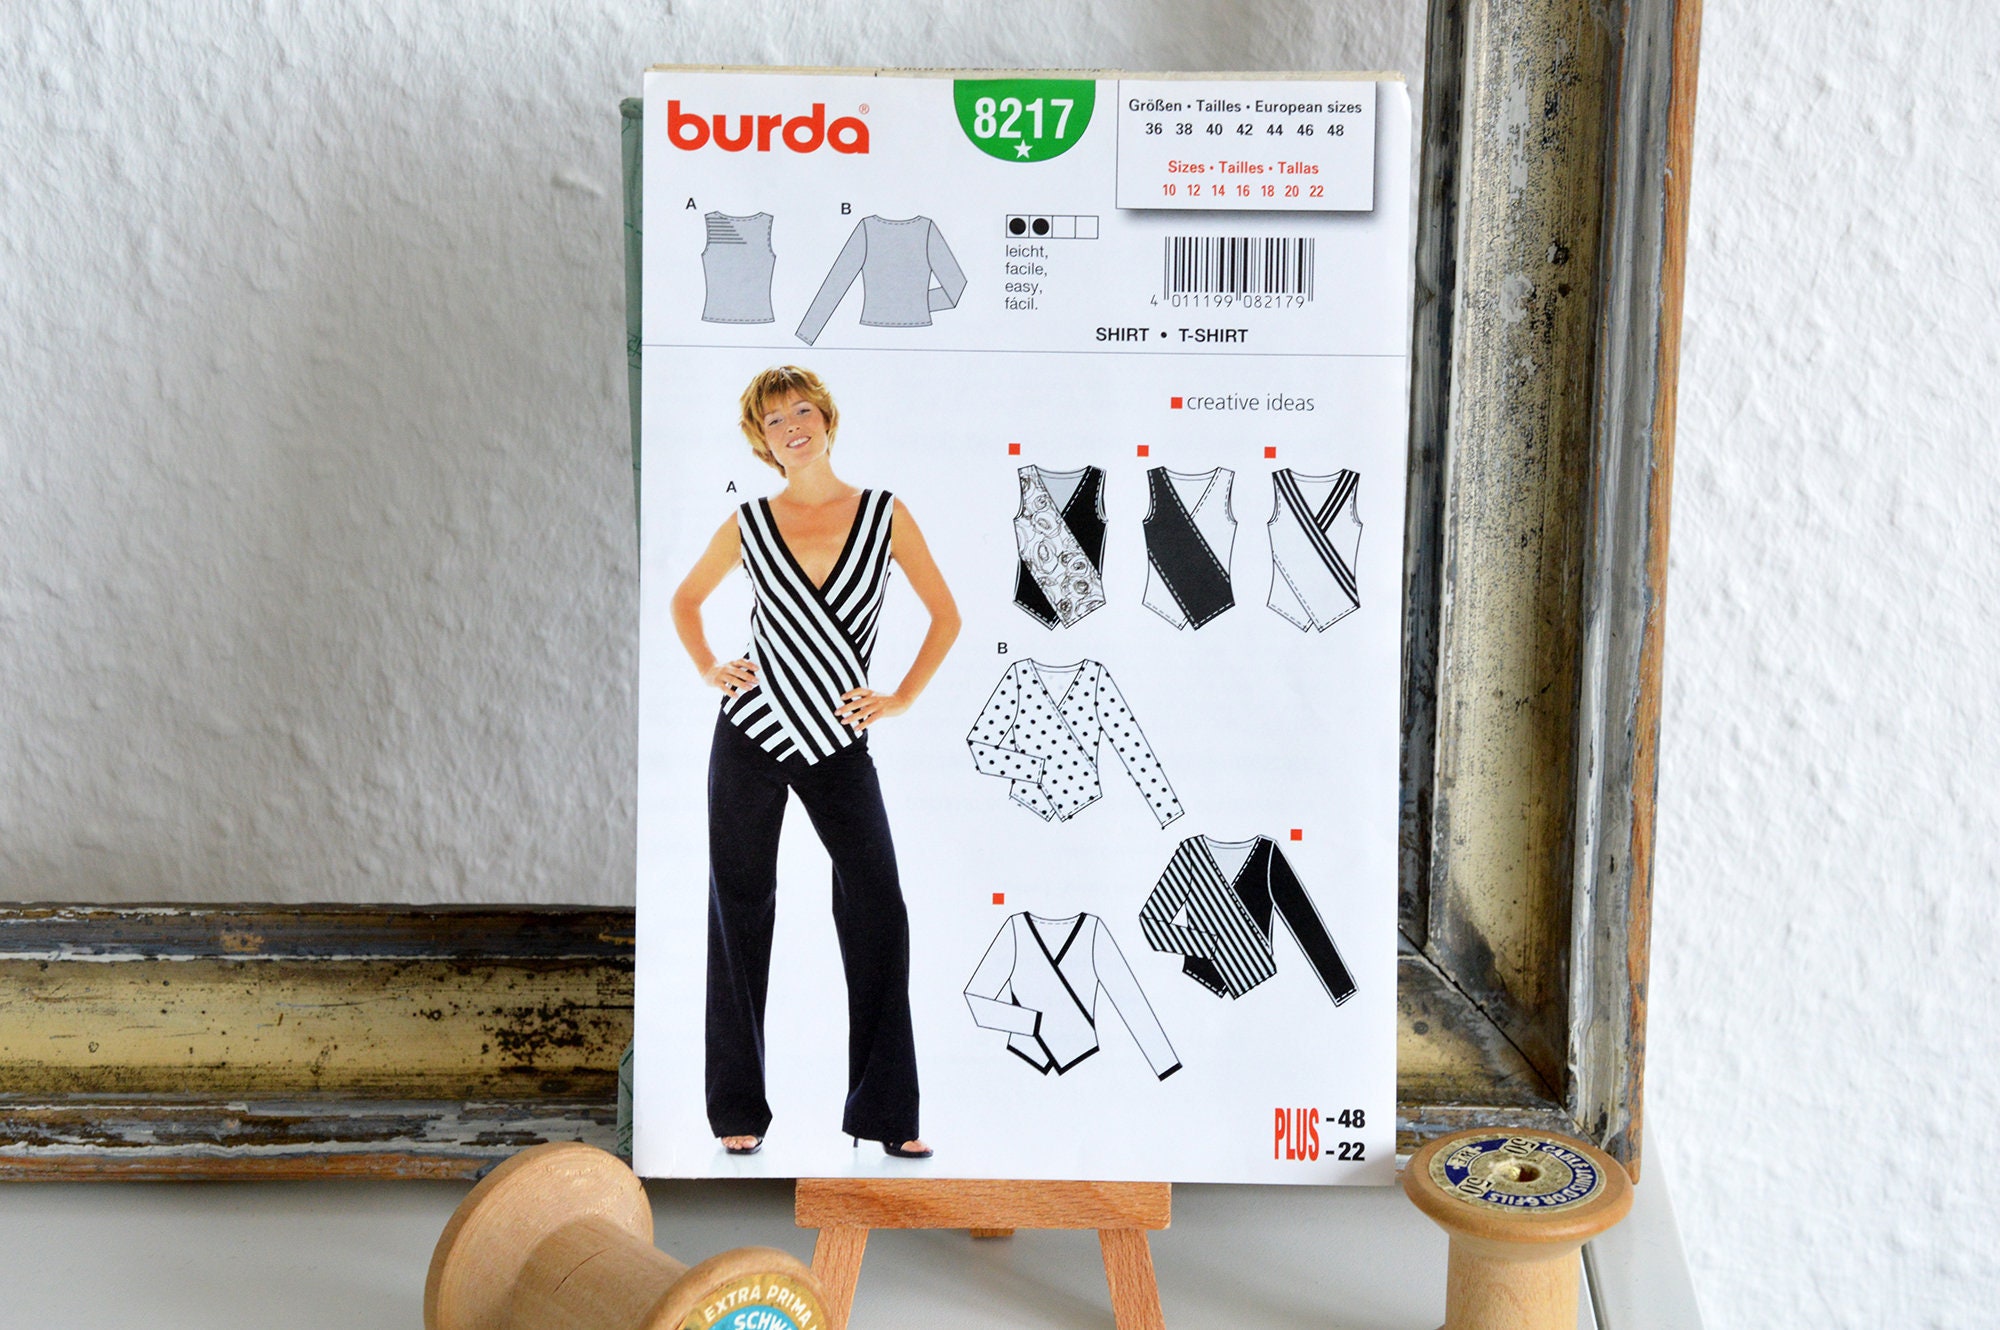 Burda Vintage Sewing Pattern 4046 Size 36-40 90's Top Wrap Top Asymmetrical Sewing